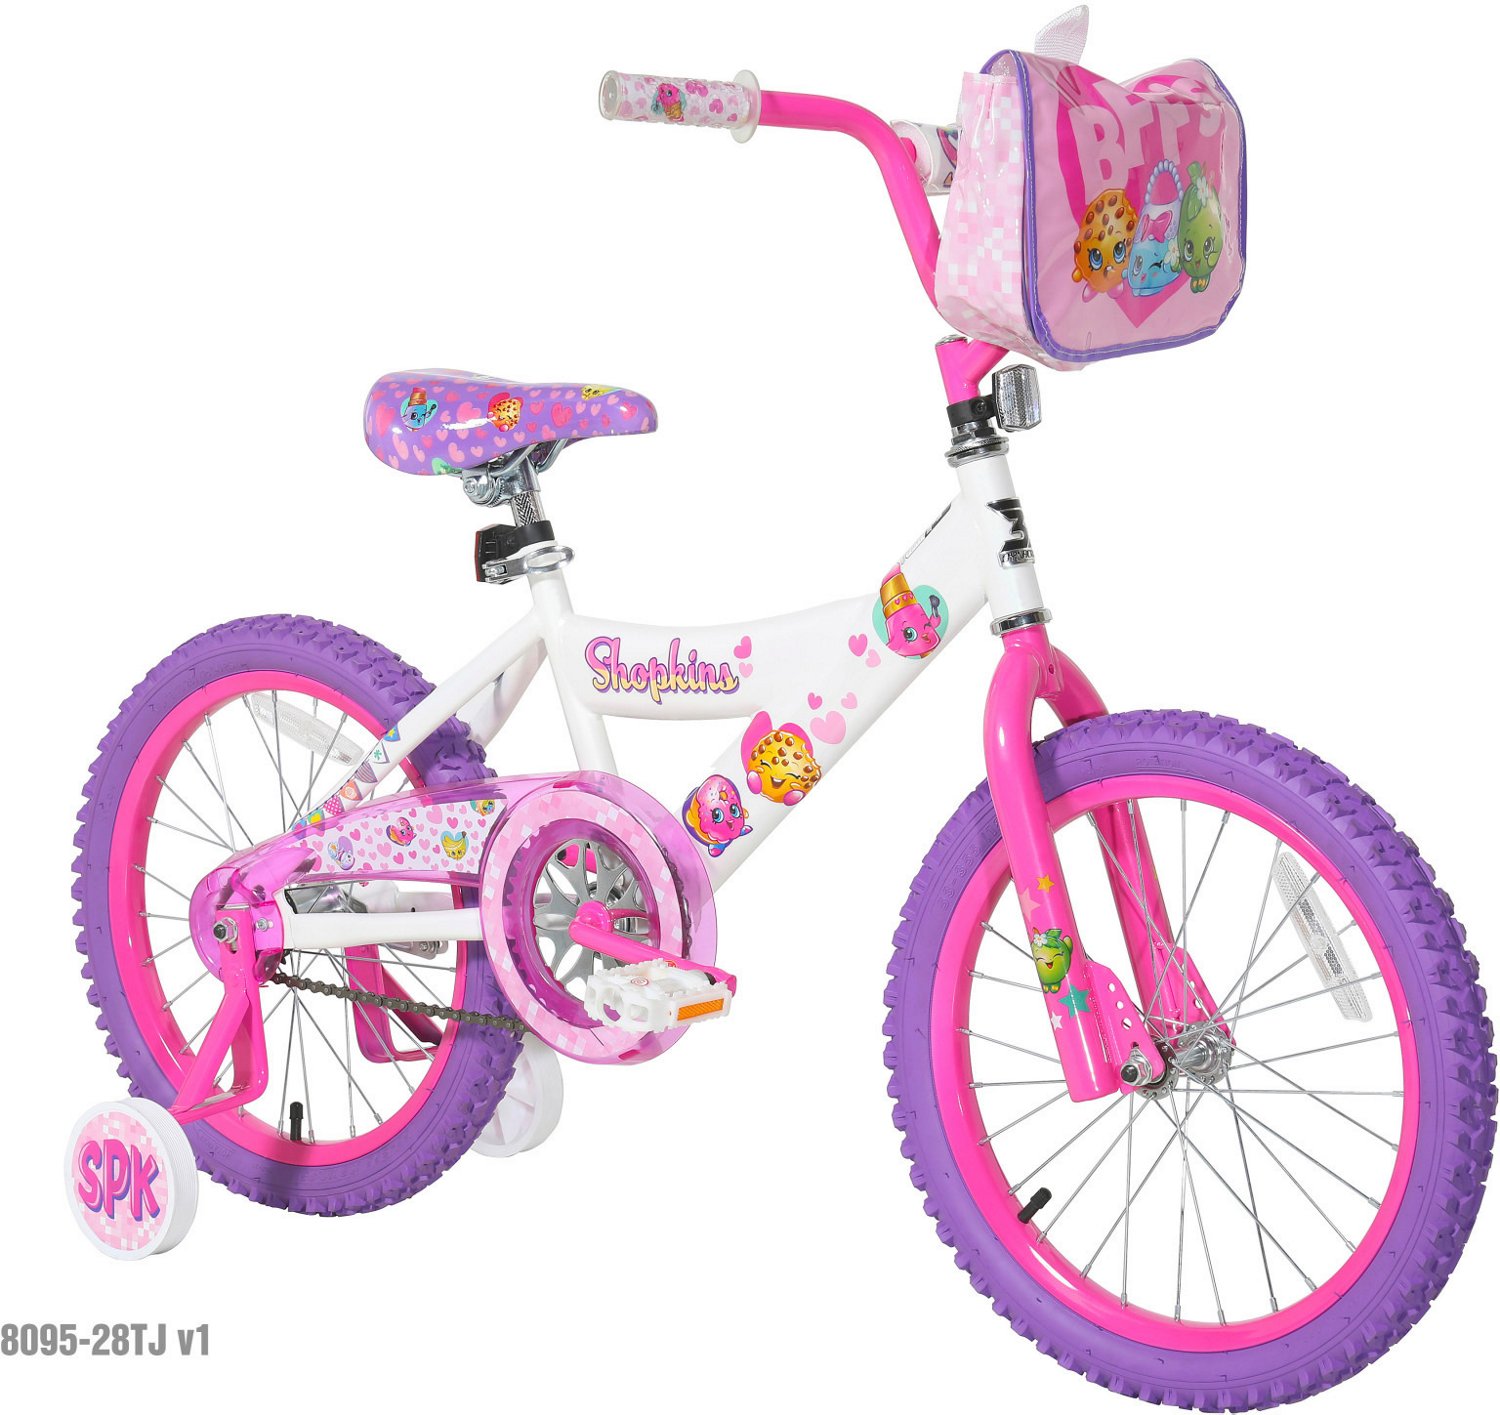 dynacraft magna starburst girl's bike